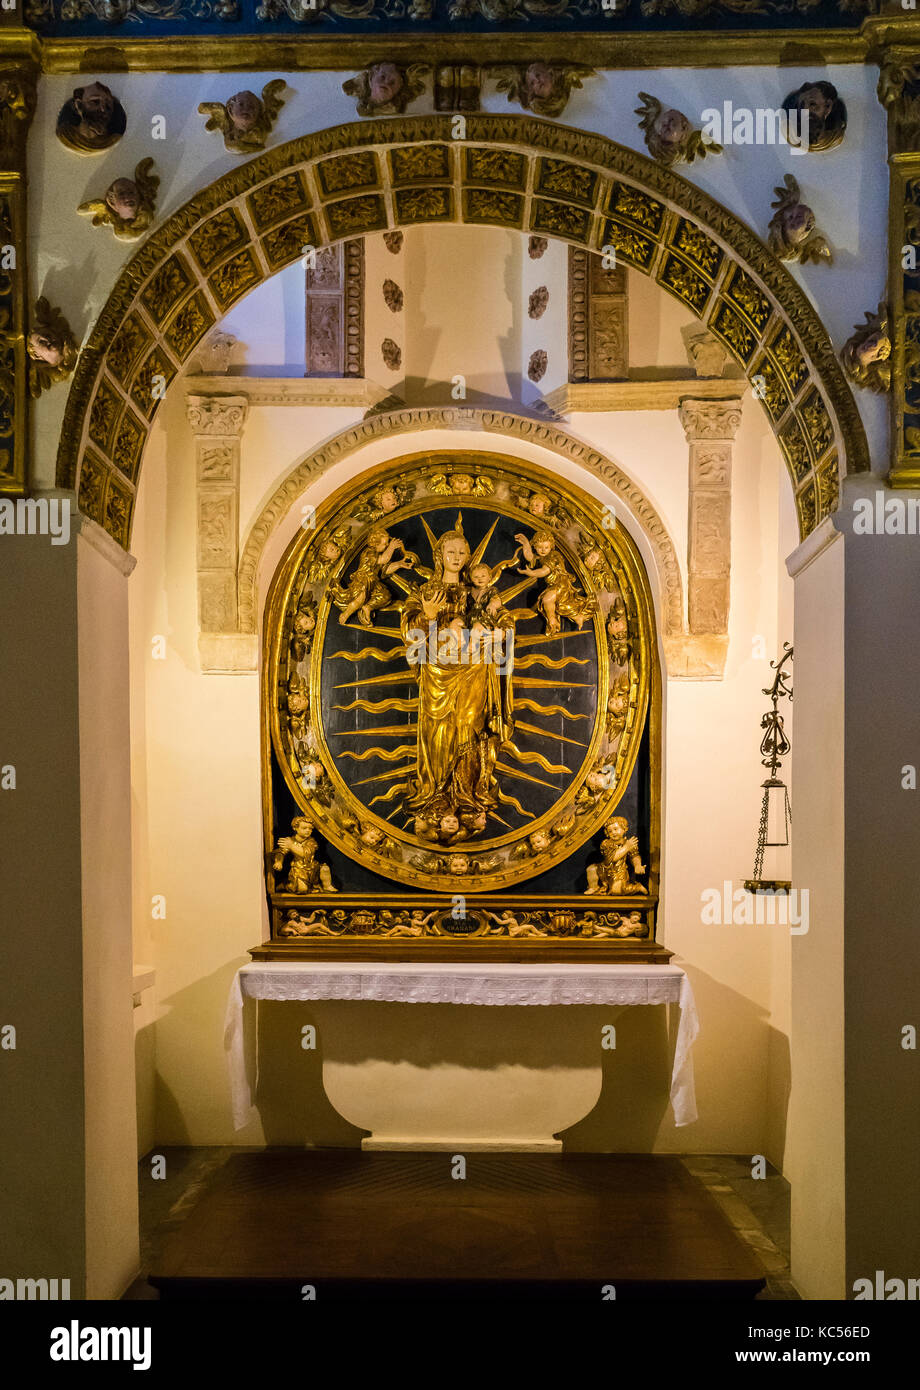 Madonna della corona illuminata, Virgen de la Granada, Panteón ducale, rinascimentale, Colegiata Santa Maria, Osuna Foto Stock